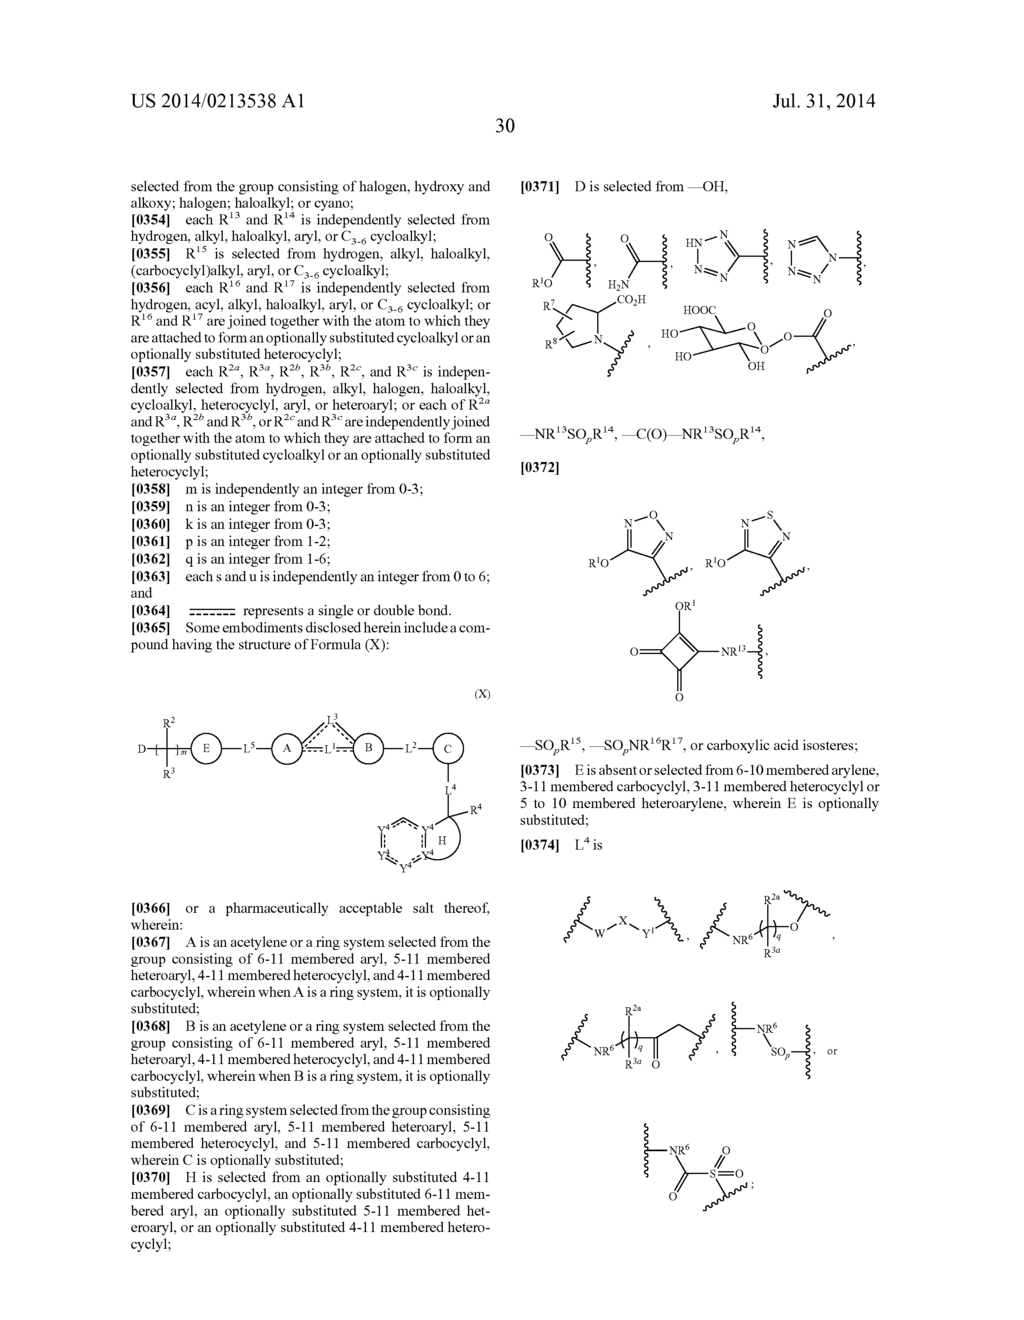 LYSOPHOSPHATIDIC ACID RECEPTOR ANTAGONISTS - diagram, schematic, and image 31